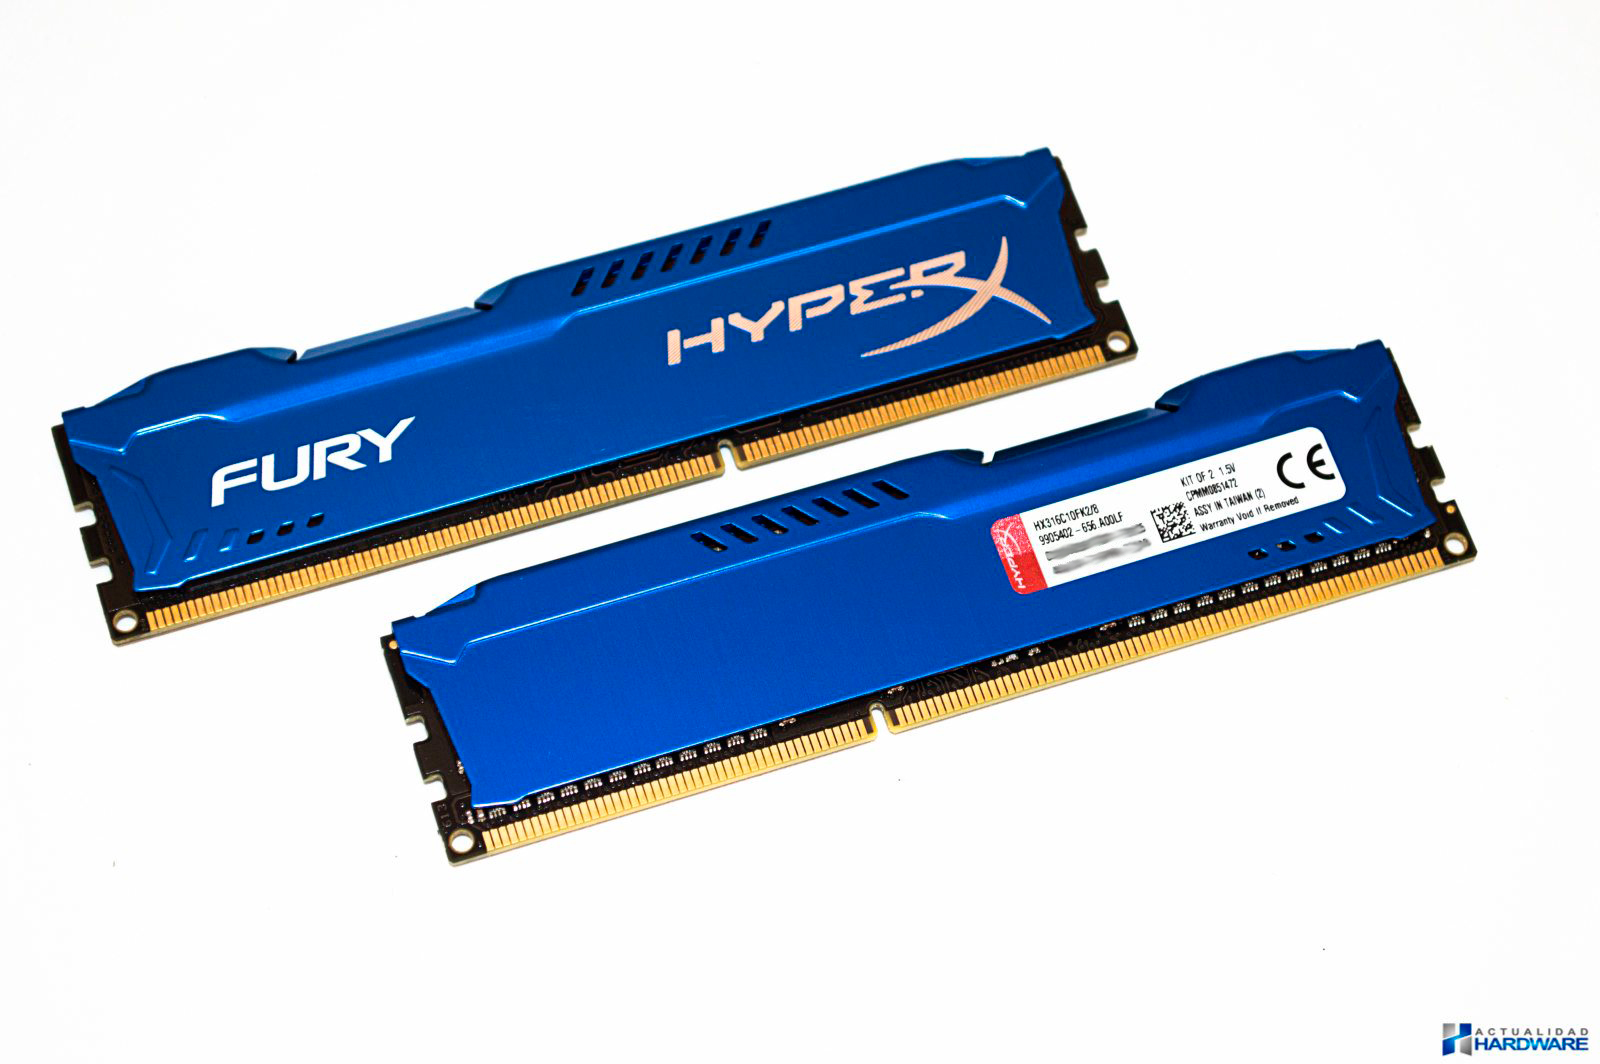 resbalón aceptar Artificial REVIEW: KINGSTON HYPERX FURY 8GB KIT (2x4GB) - DDR3 1600MHz CL10 |  ACTUALIDADHARWARE.COM